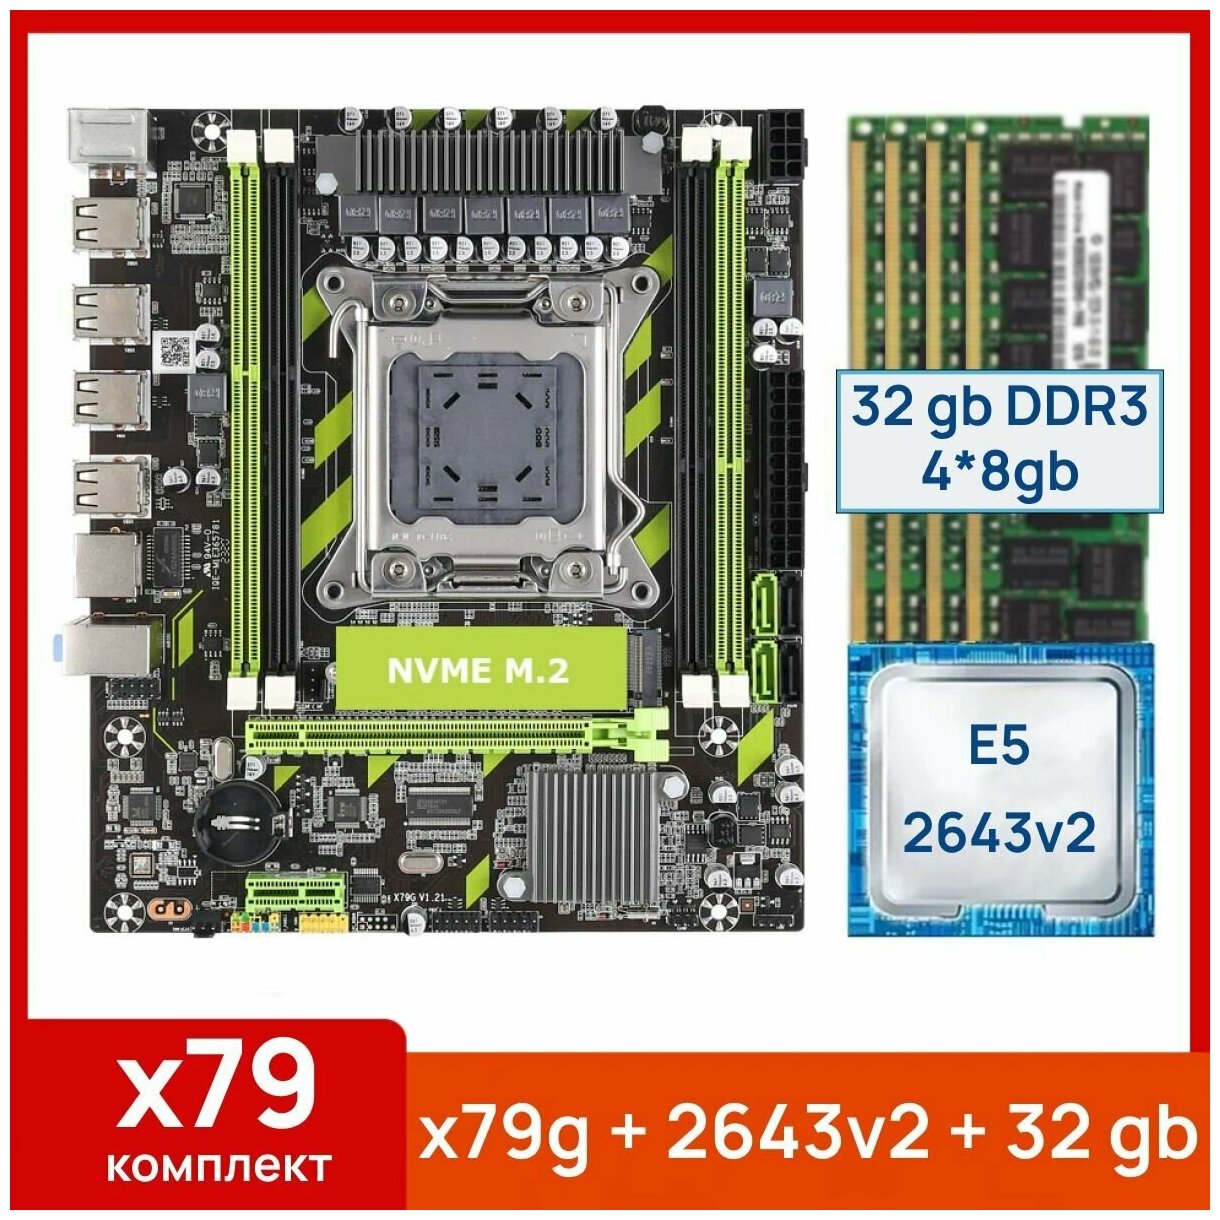 Комплект: Atermiter x79g + Xeon E5 2643v2 + 32 gb(4x8gb) DDR3 ecc reg